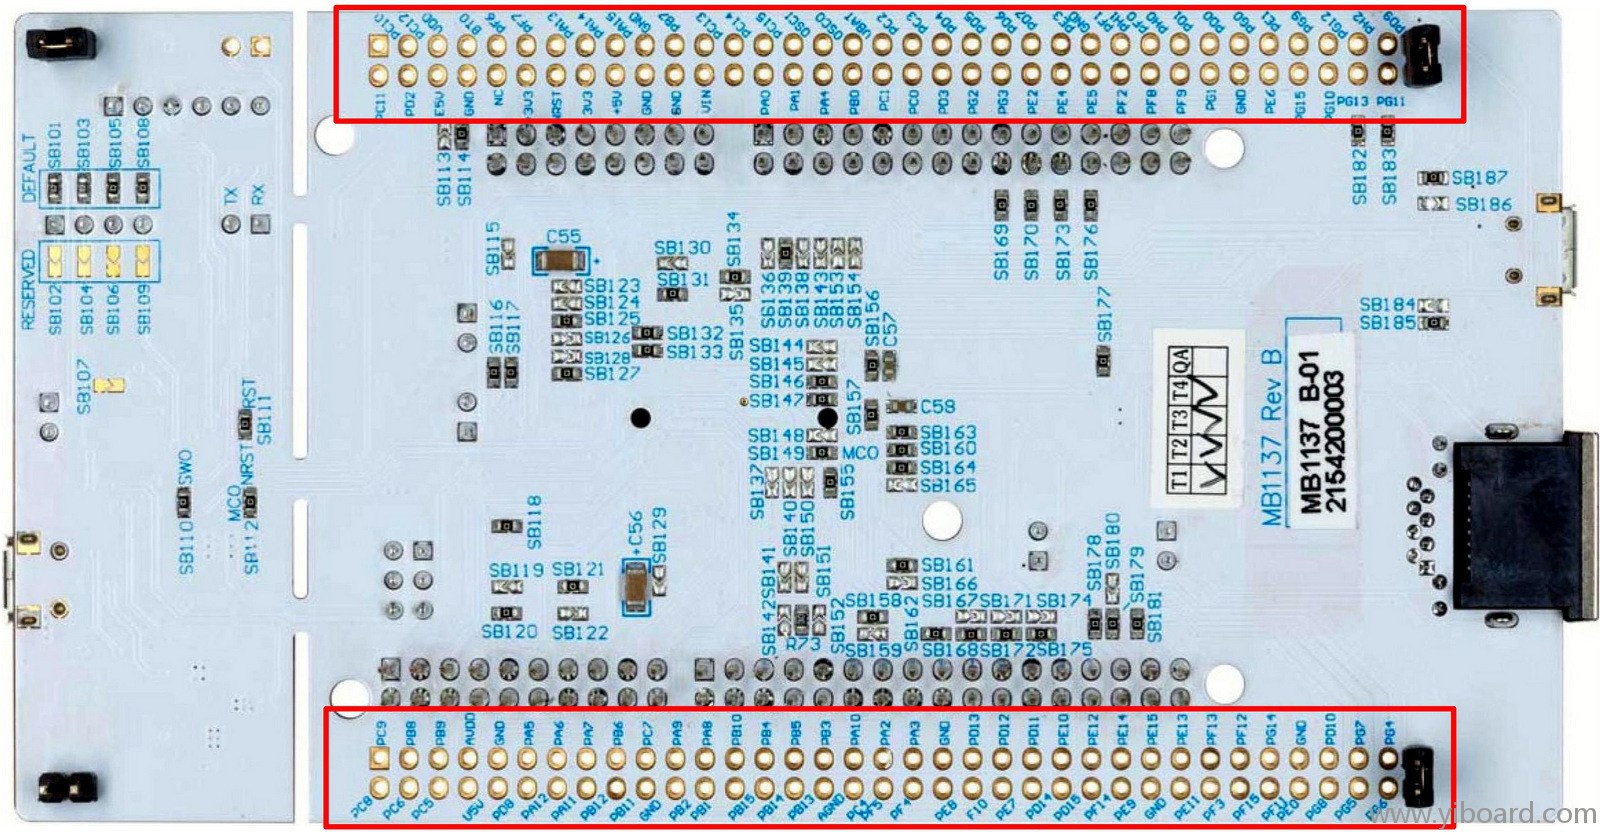 Nucleo-144-Morpho-connector.jpg